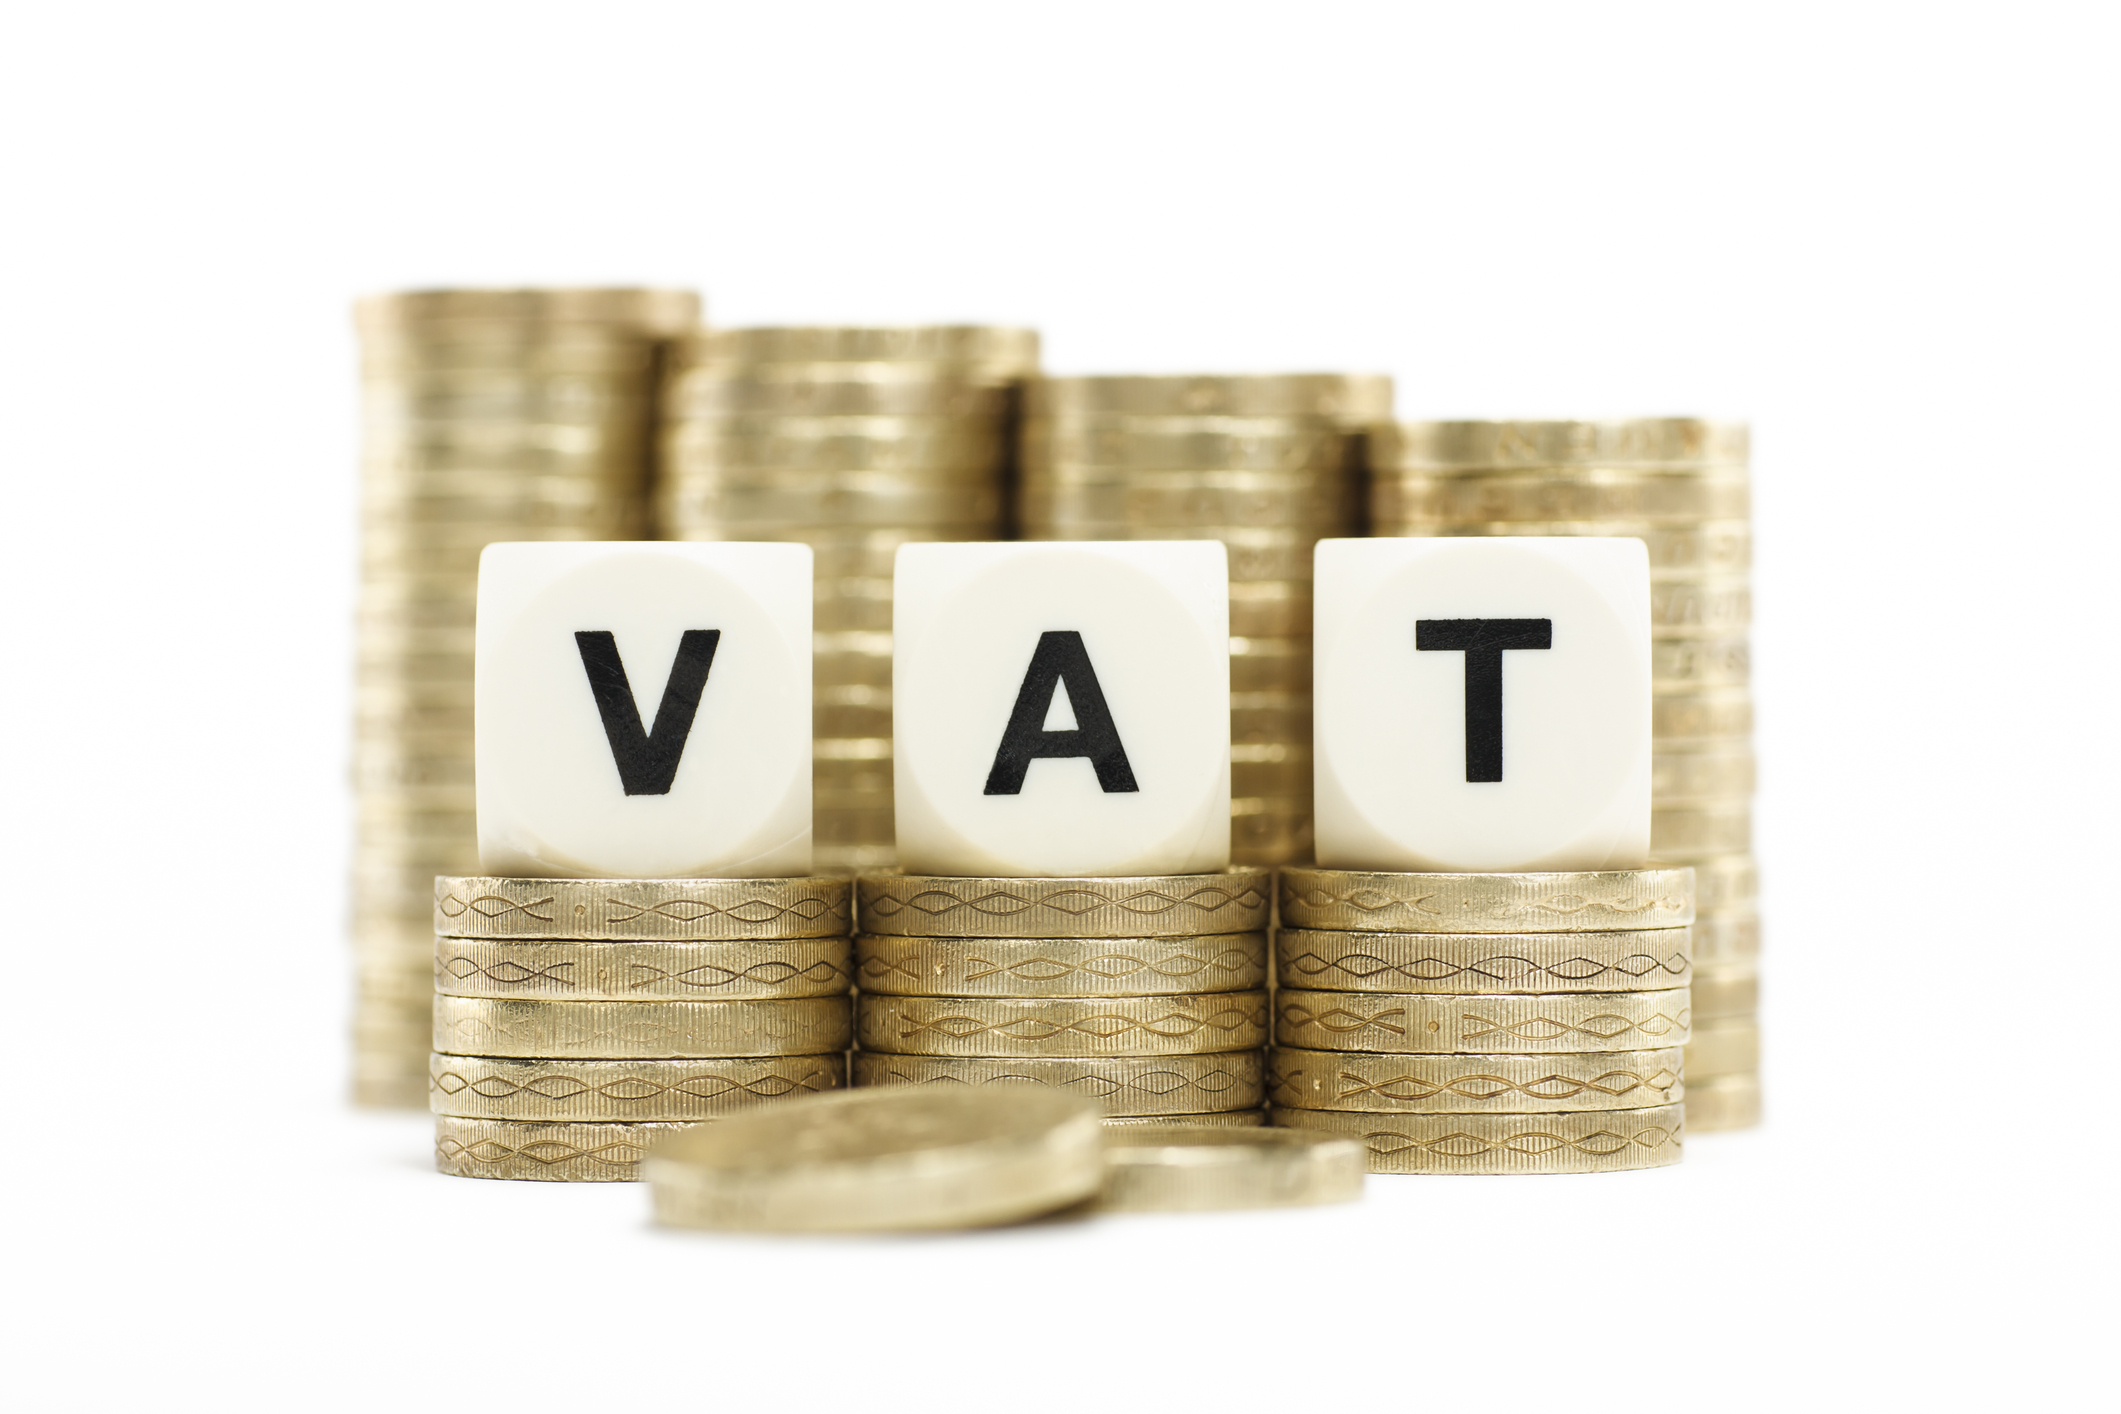 vat value added tax on gold coins on white backg 30108676